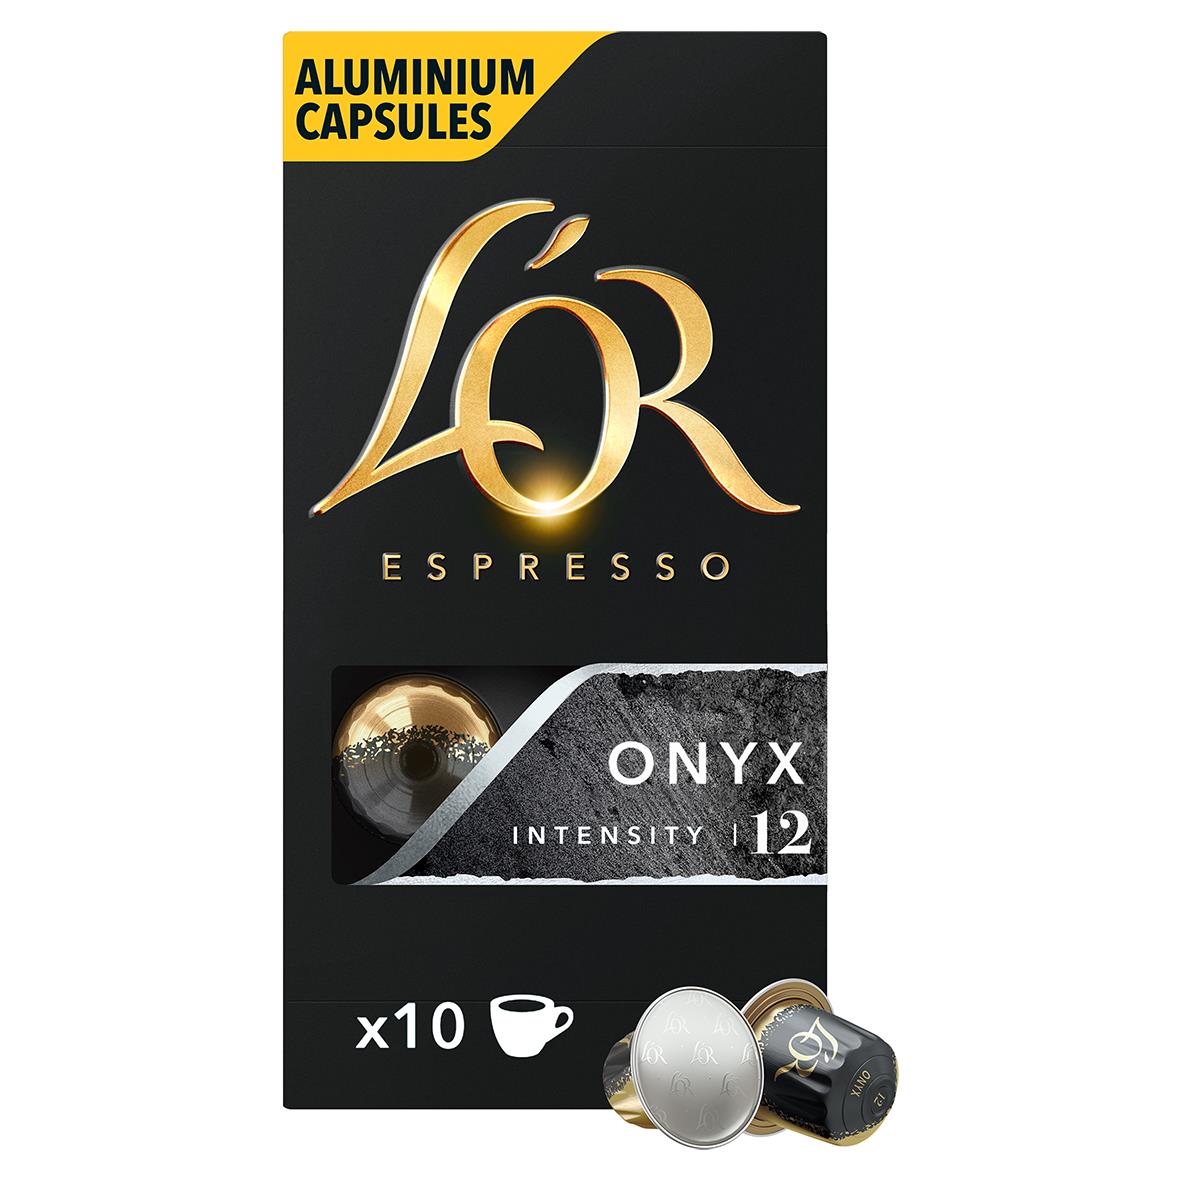 Kaffekapslar L'OR Espresso Onyx 12 60106201